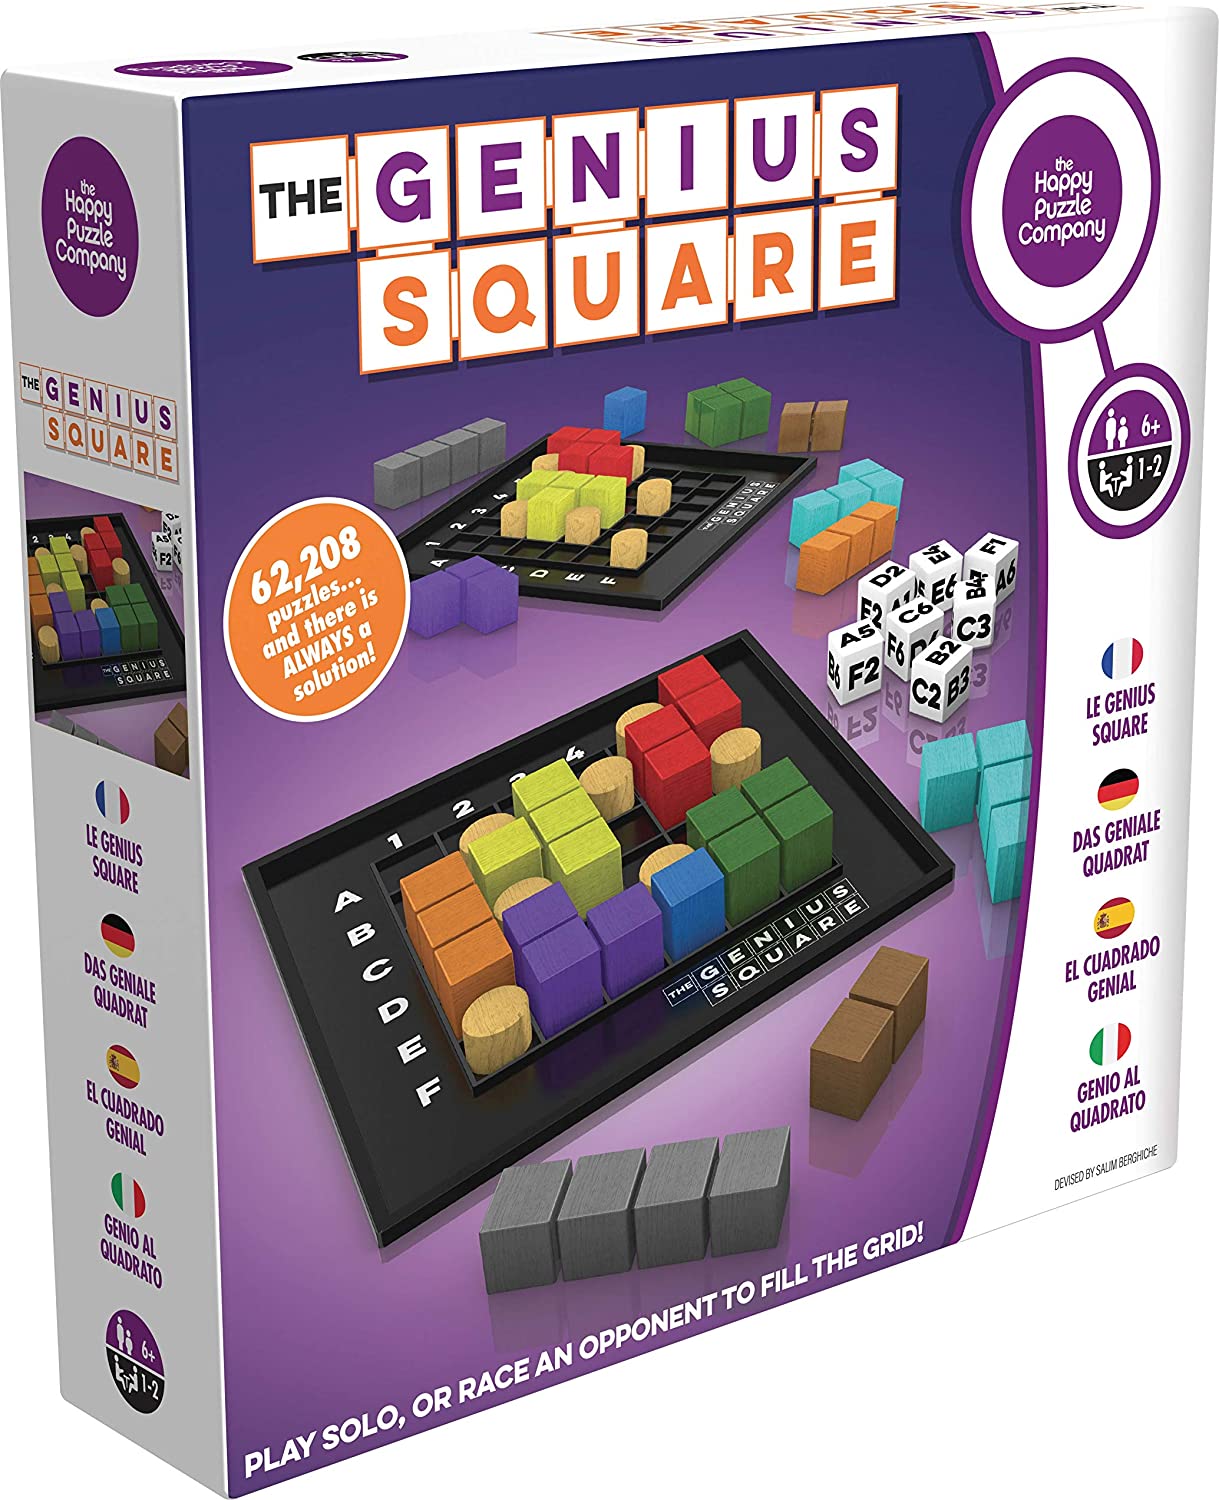 The Genius Square by Mukikim